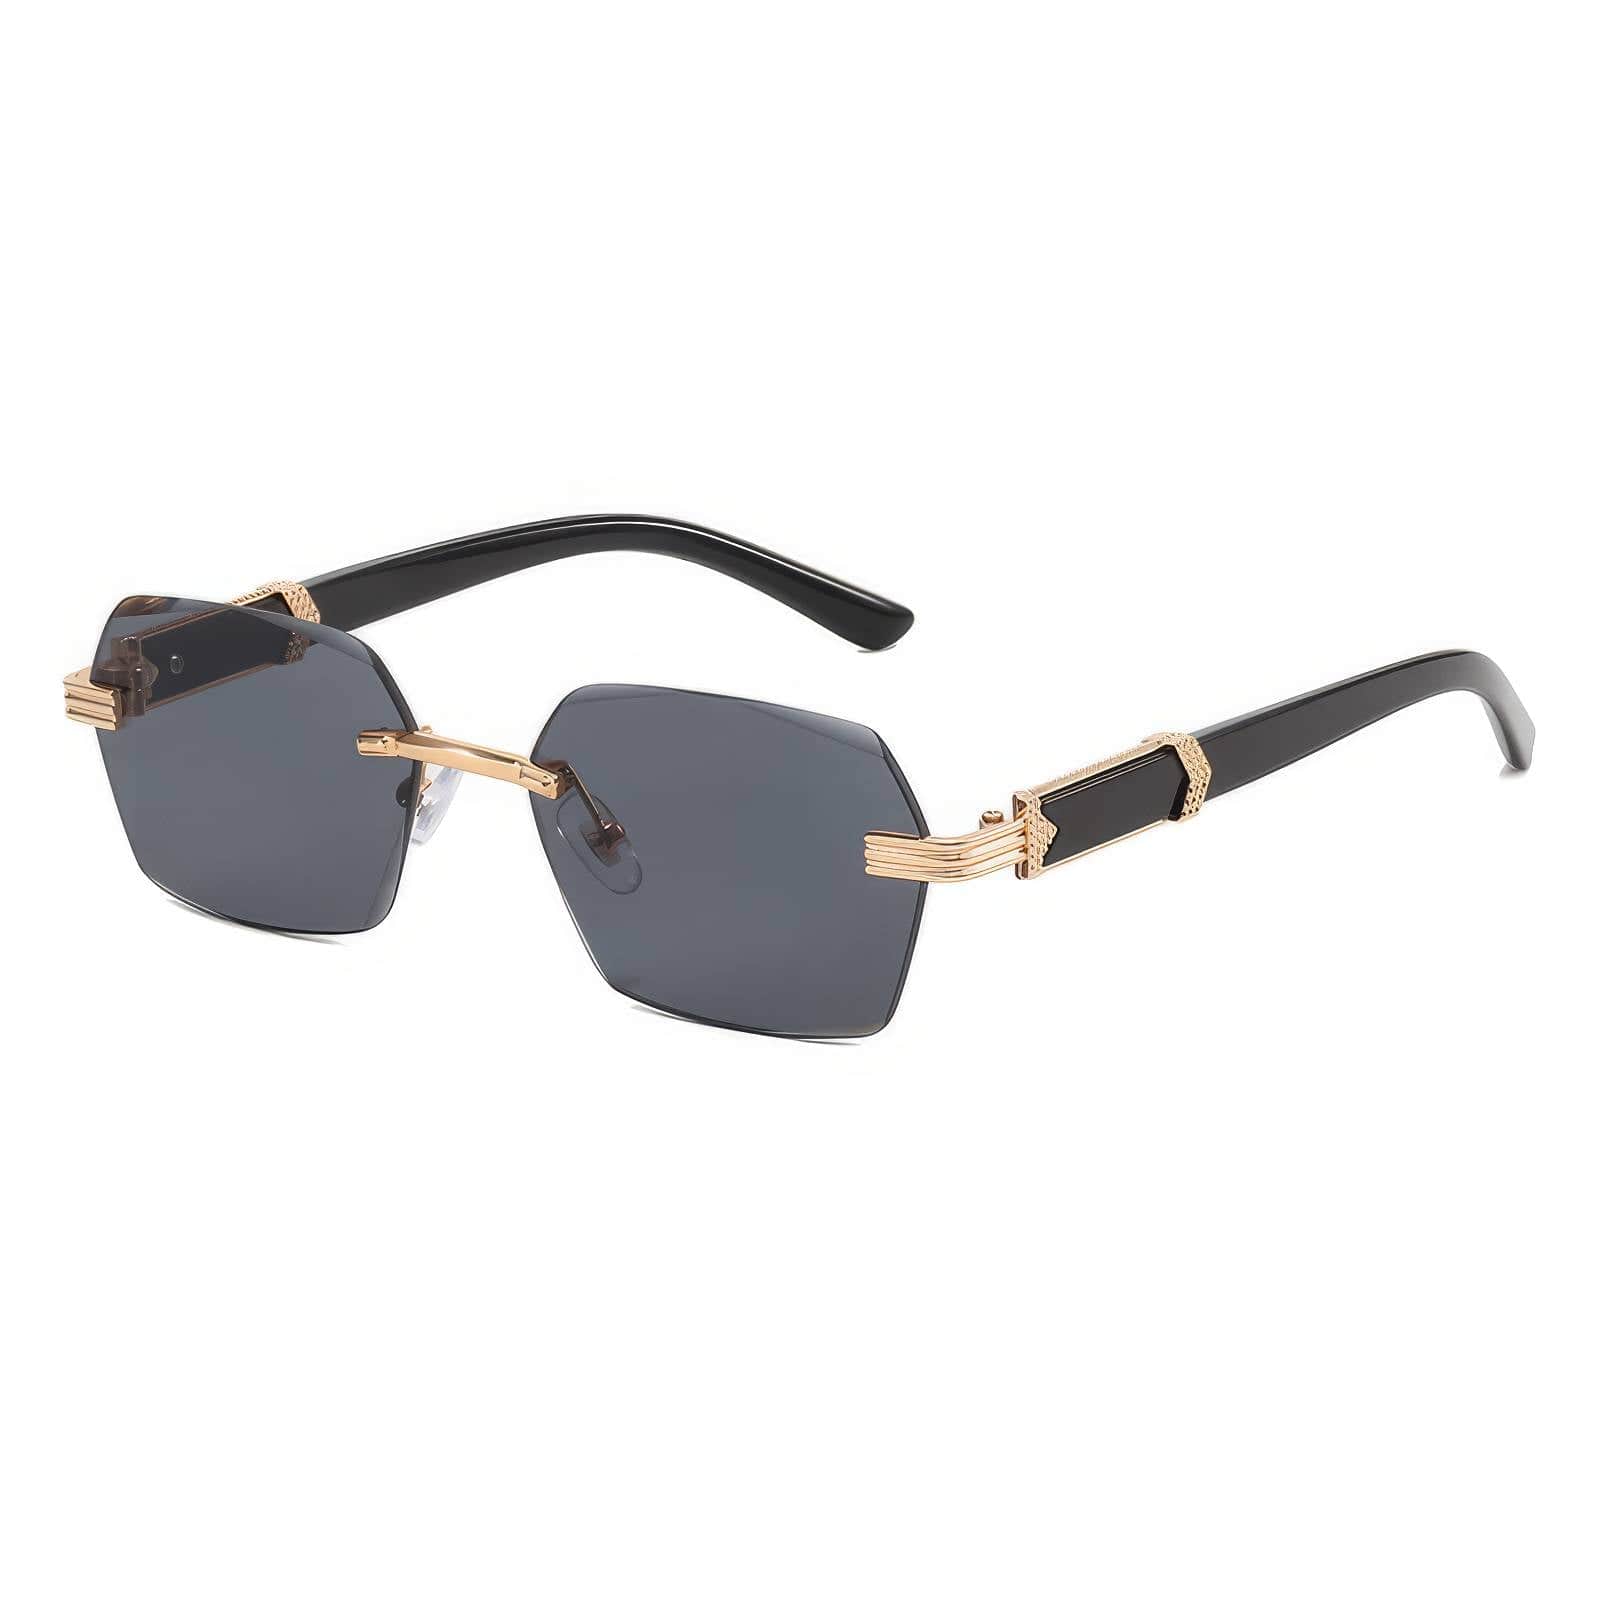 Borderless Tinted Sunglasses Gray/Gold / Resin